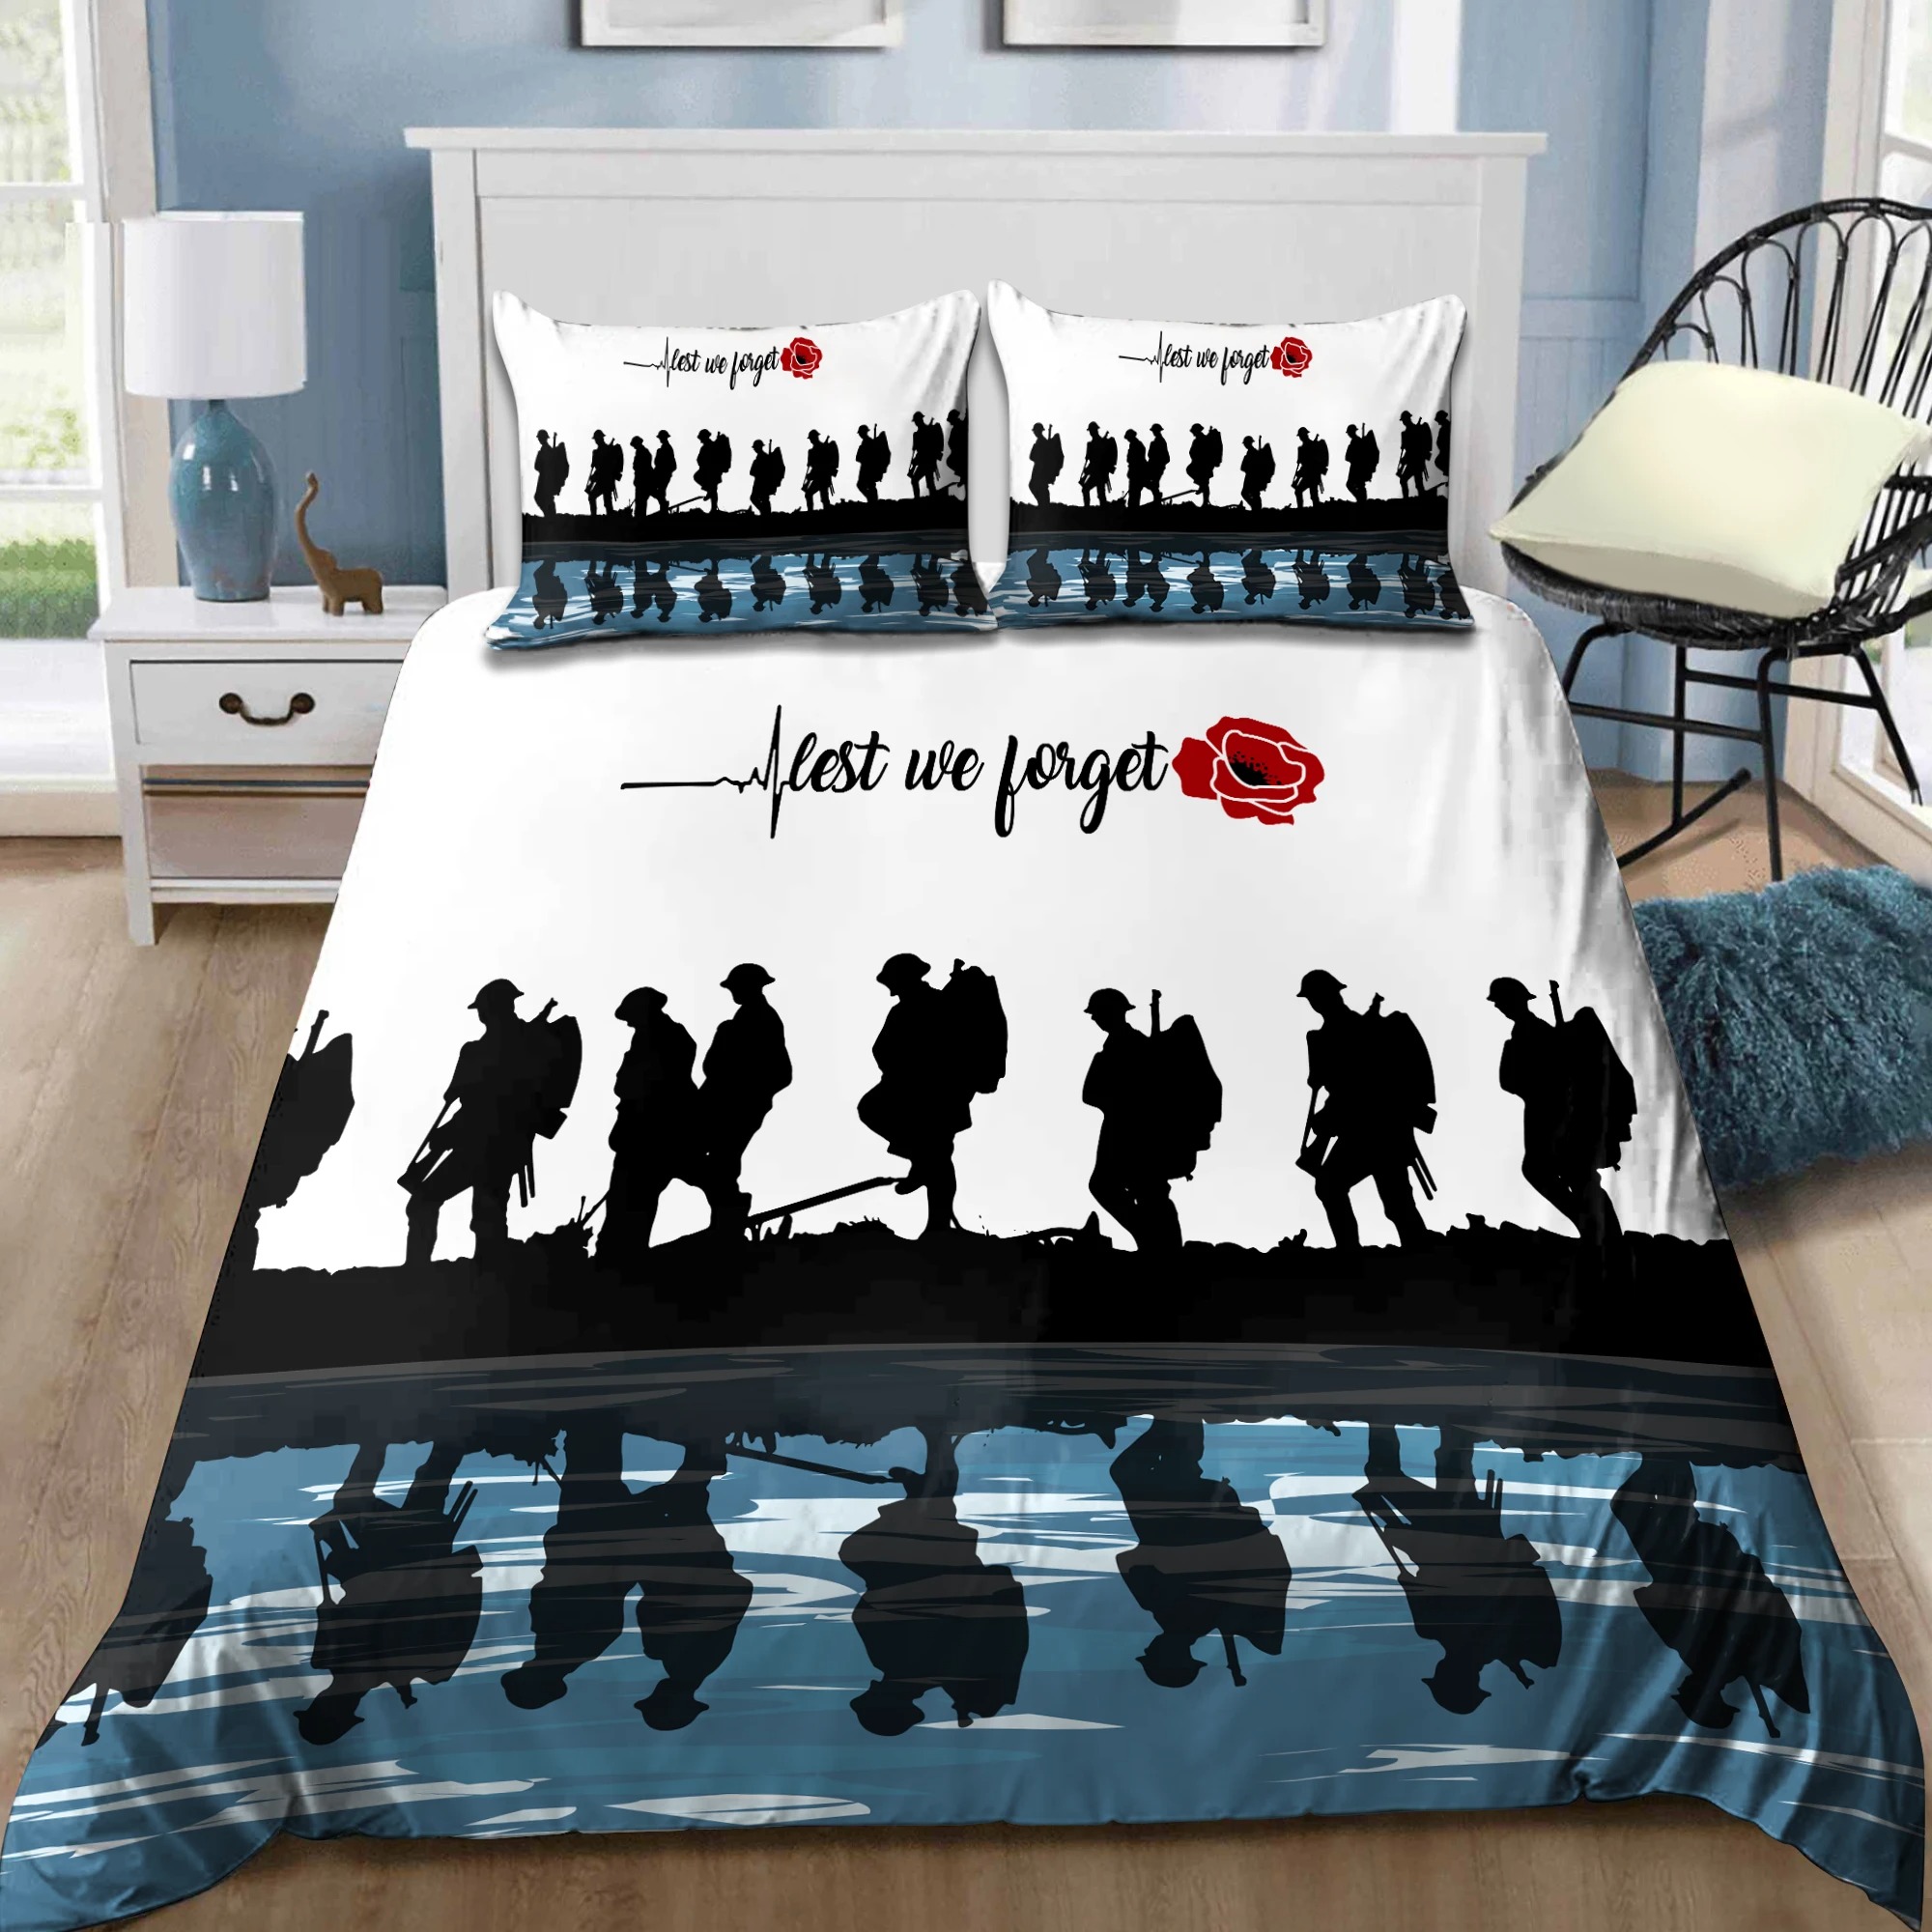 UK Veteran Let we forget honor the fallen bedding set2